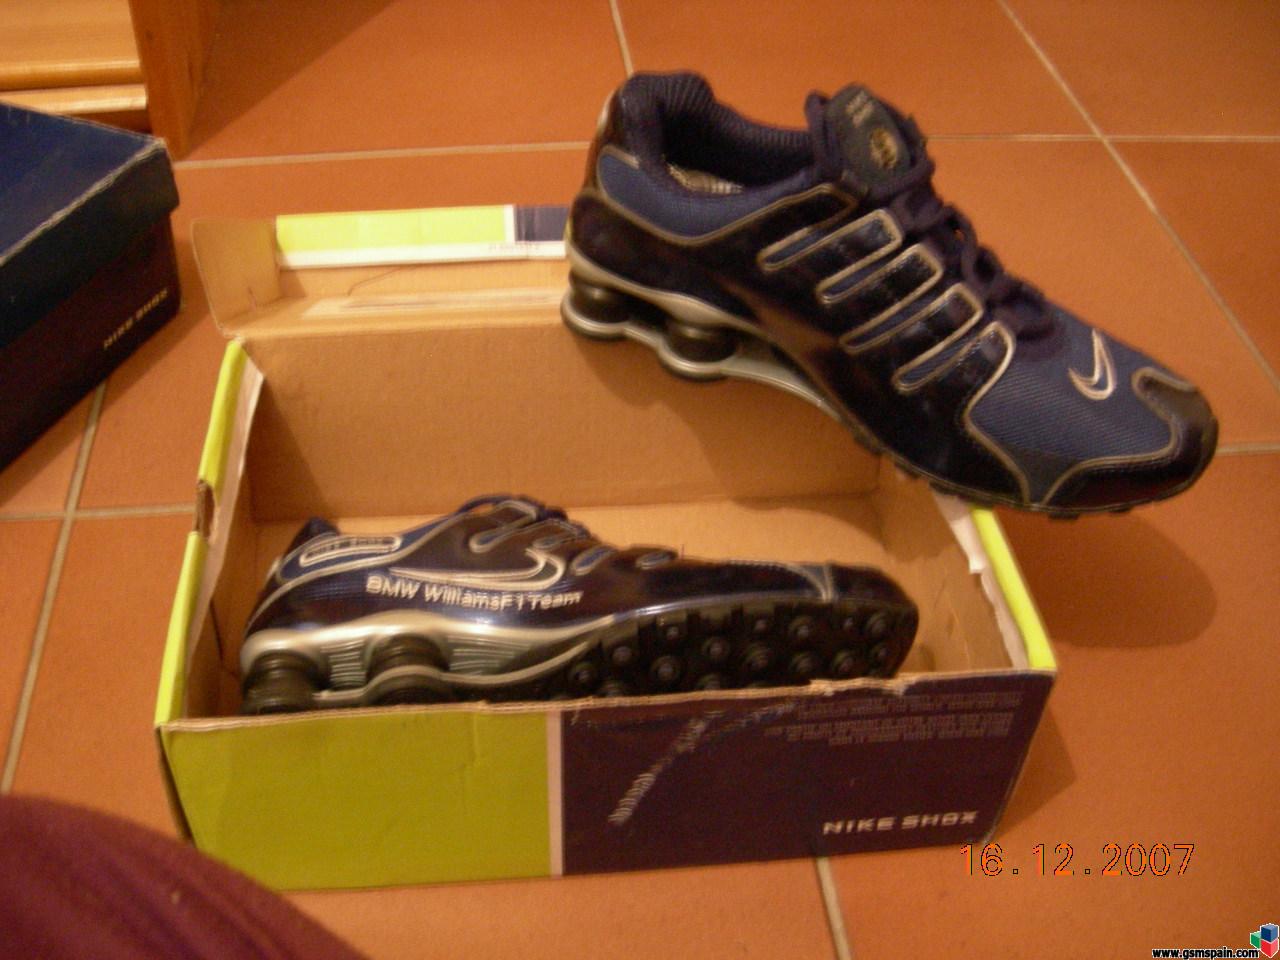 Zapatillas Envio Directo (shox, Jordan, Adidas...)